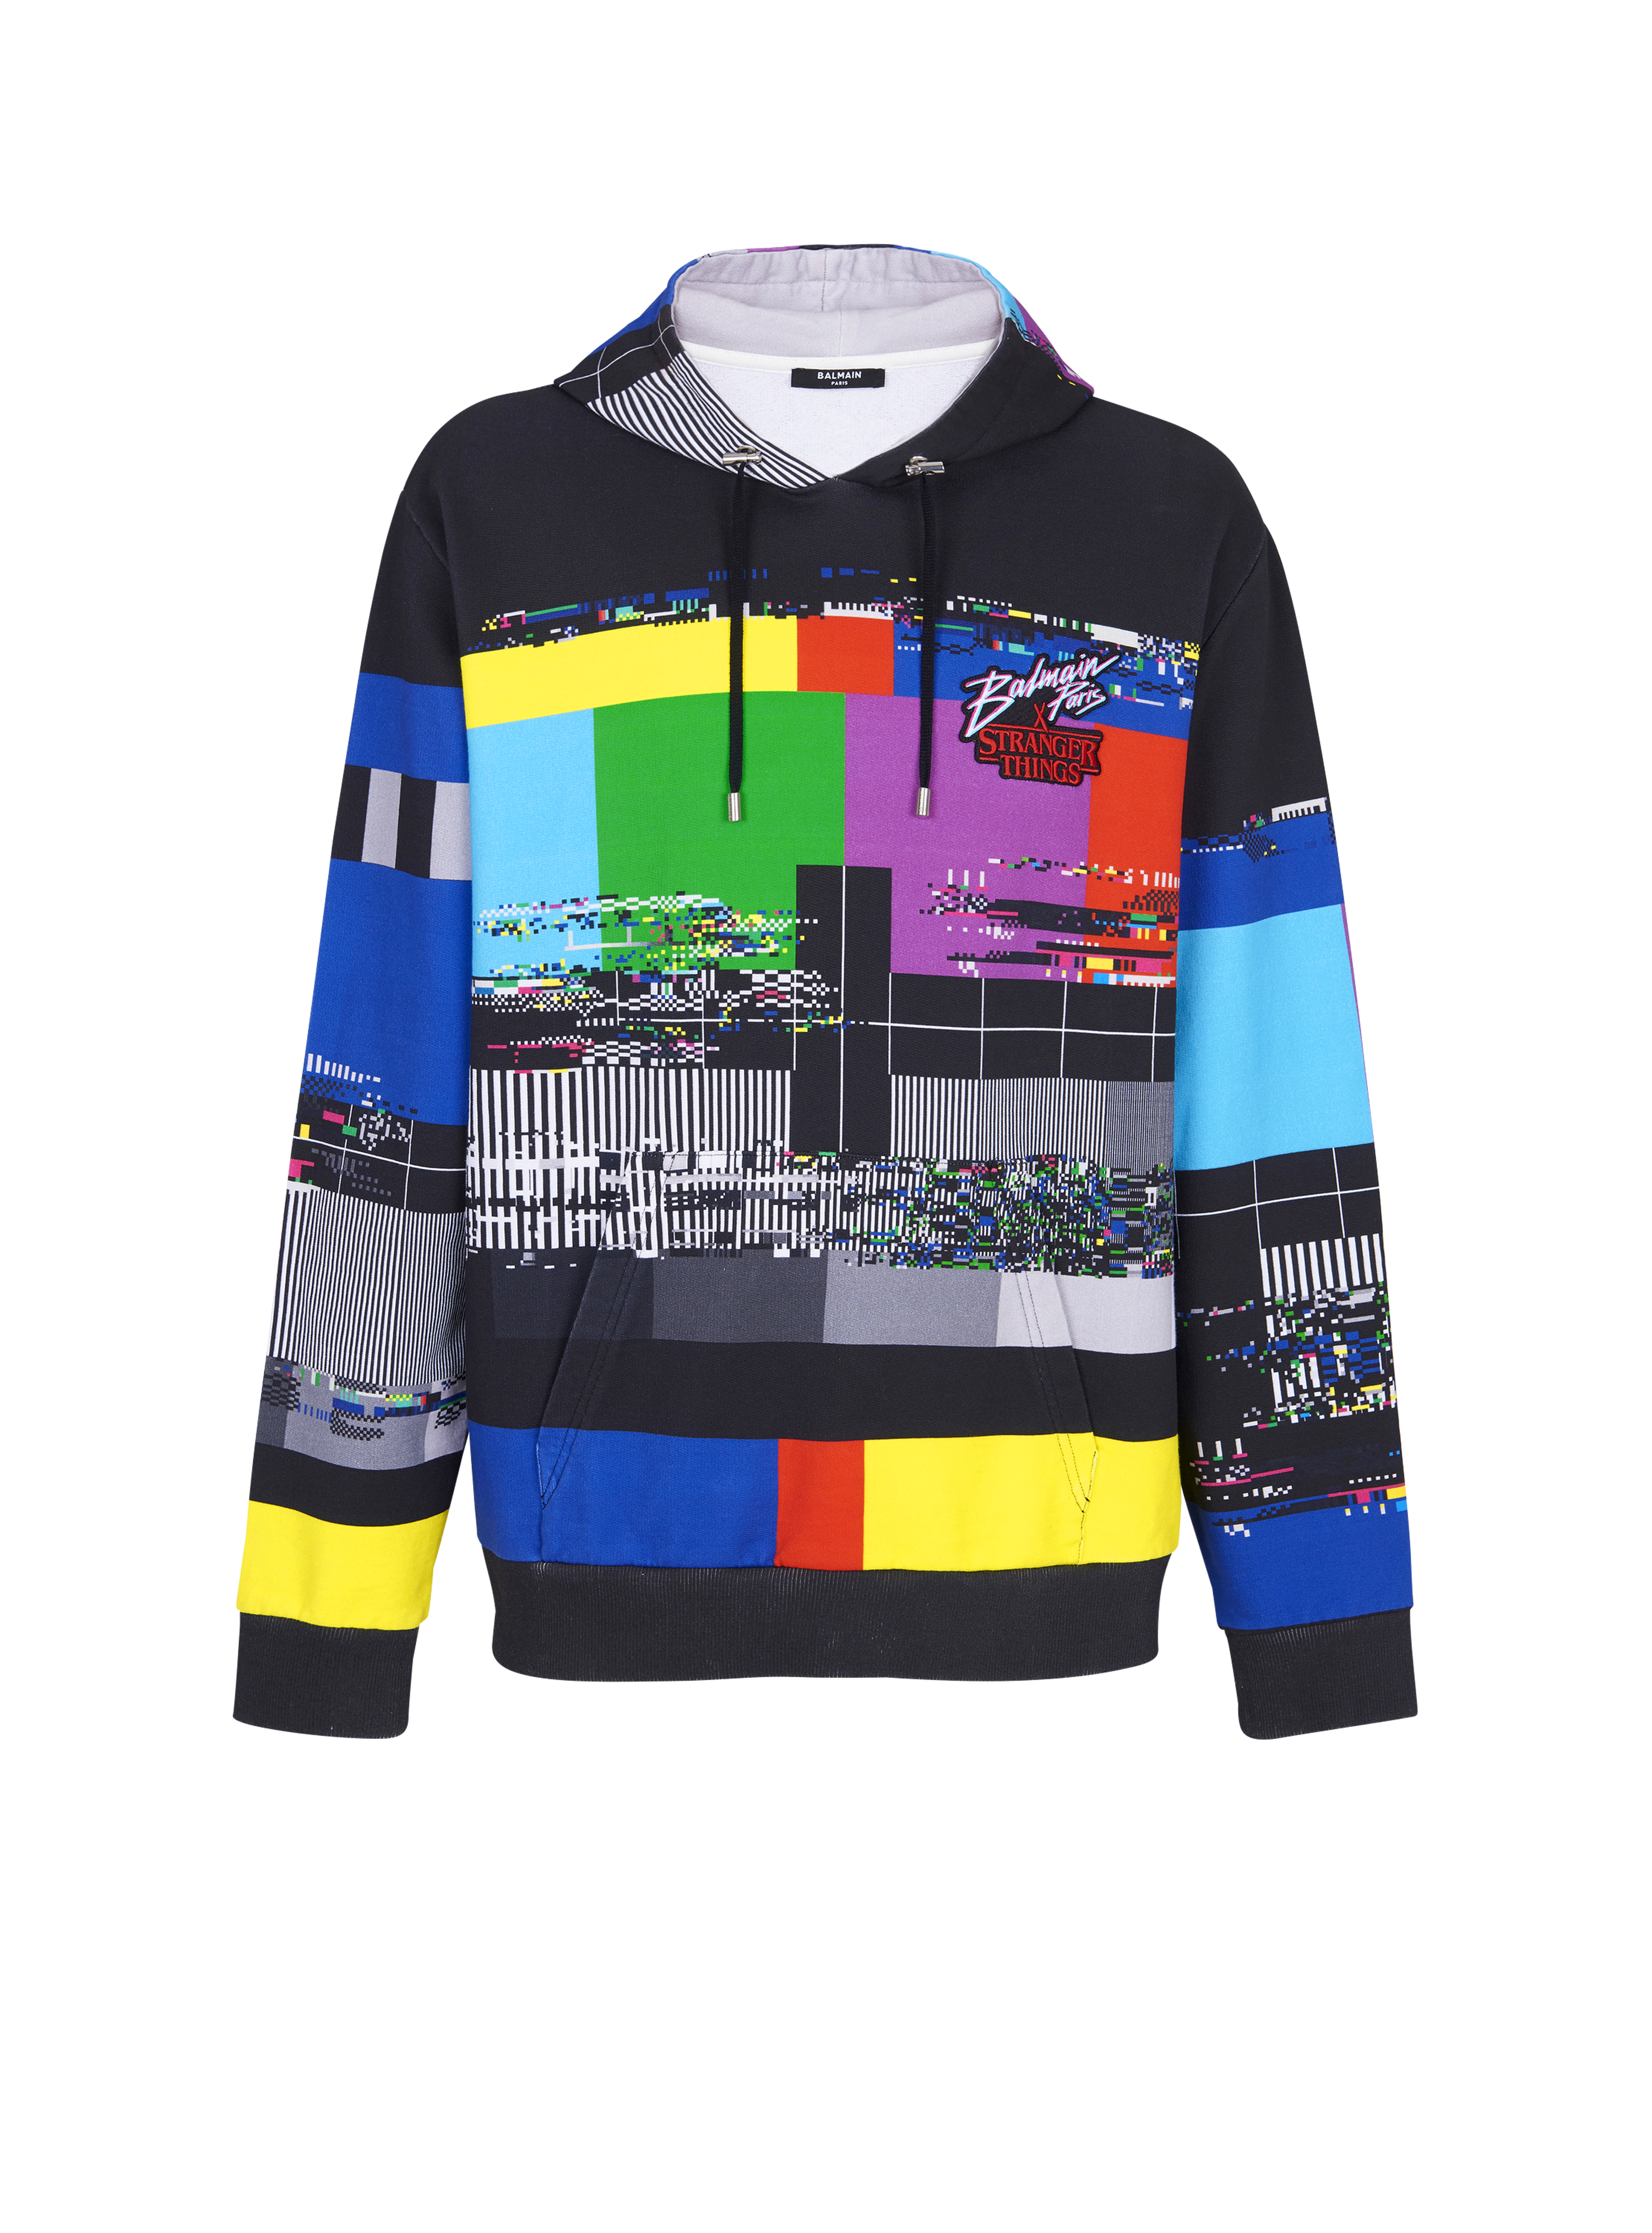 Balmain x Stranger Things - Print sweatshirt, multicolor